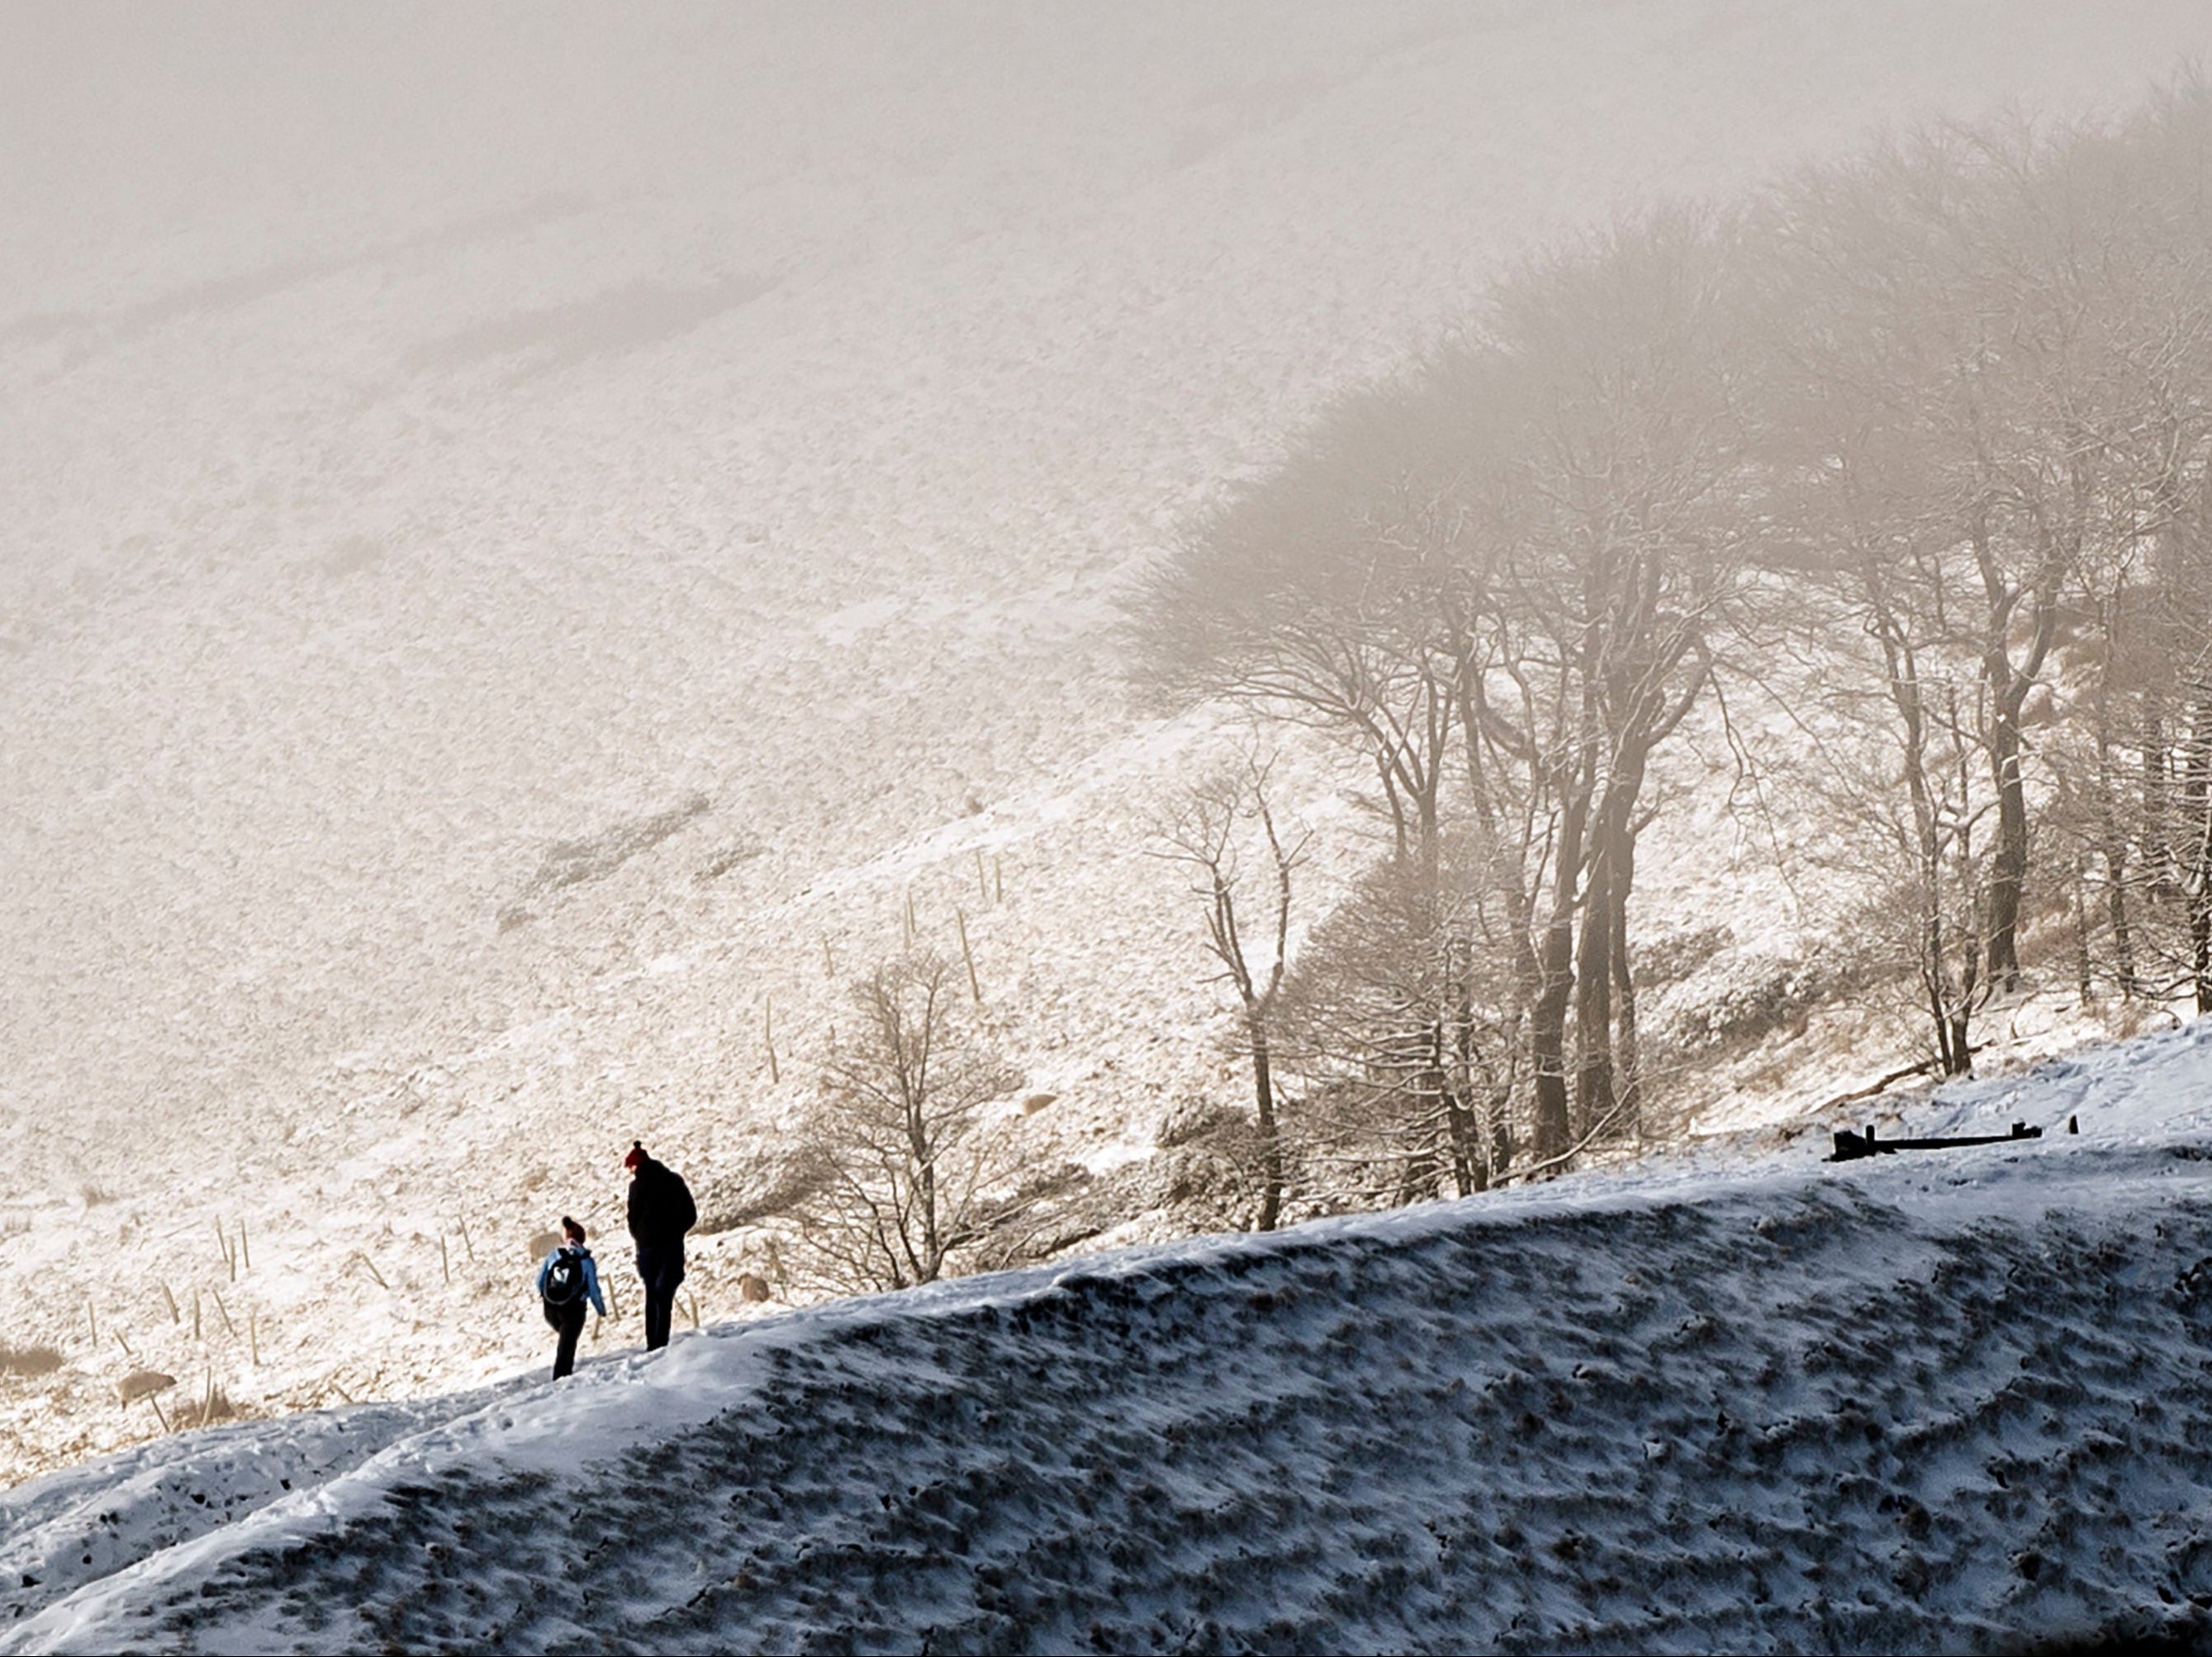 A snowy scene near Mam Tor in the Peak District, Derbyshire